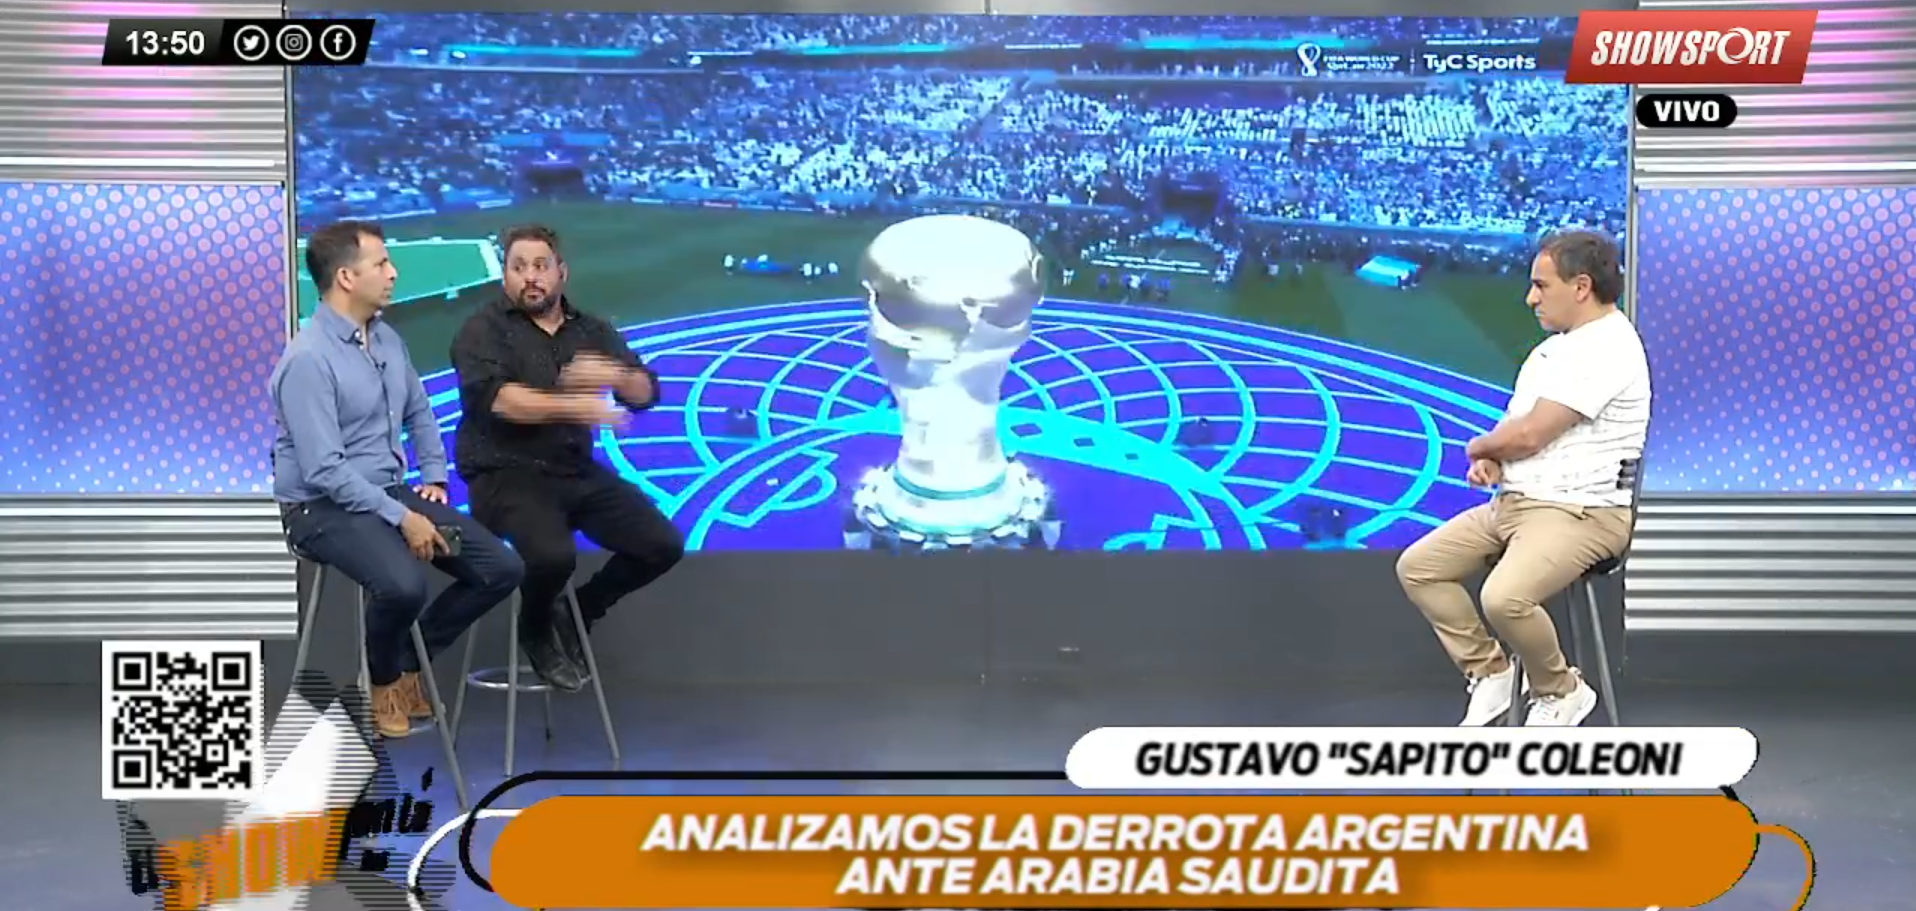 La columna de Gustavo Coleoni sobre la caída de Argentina ante Arabia Saudita | Canal Showsport